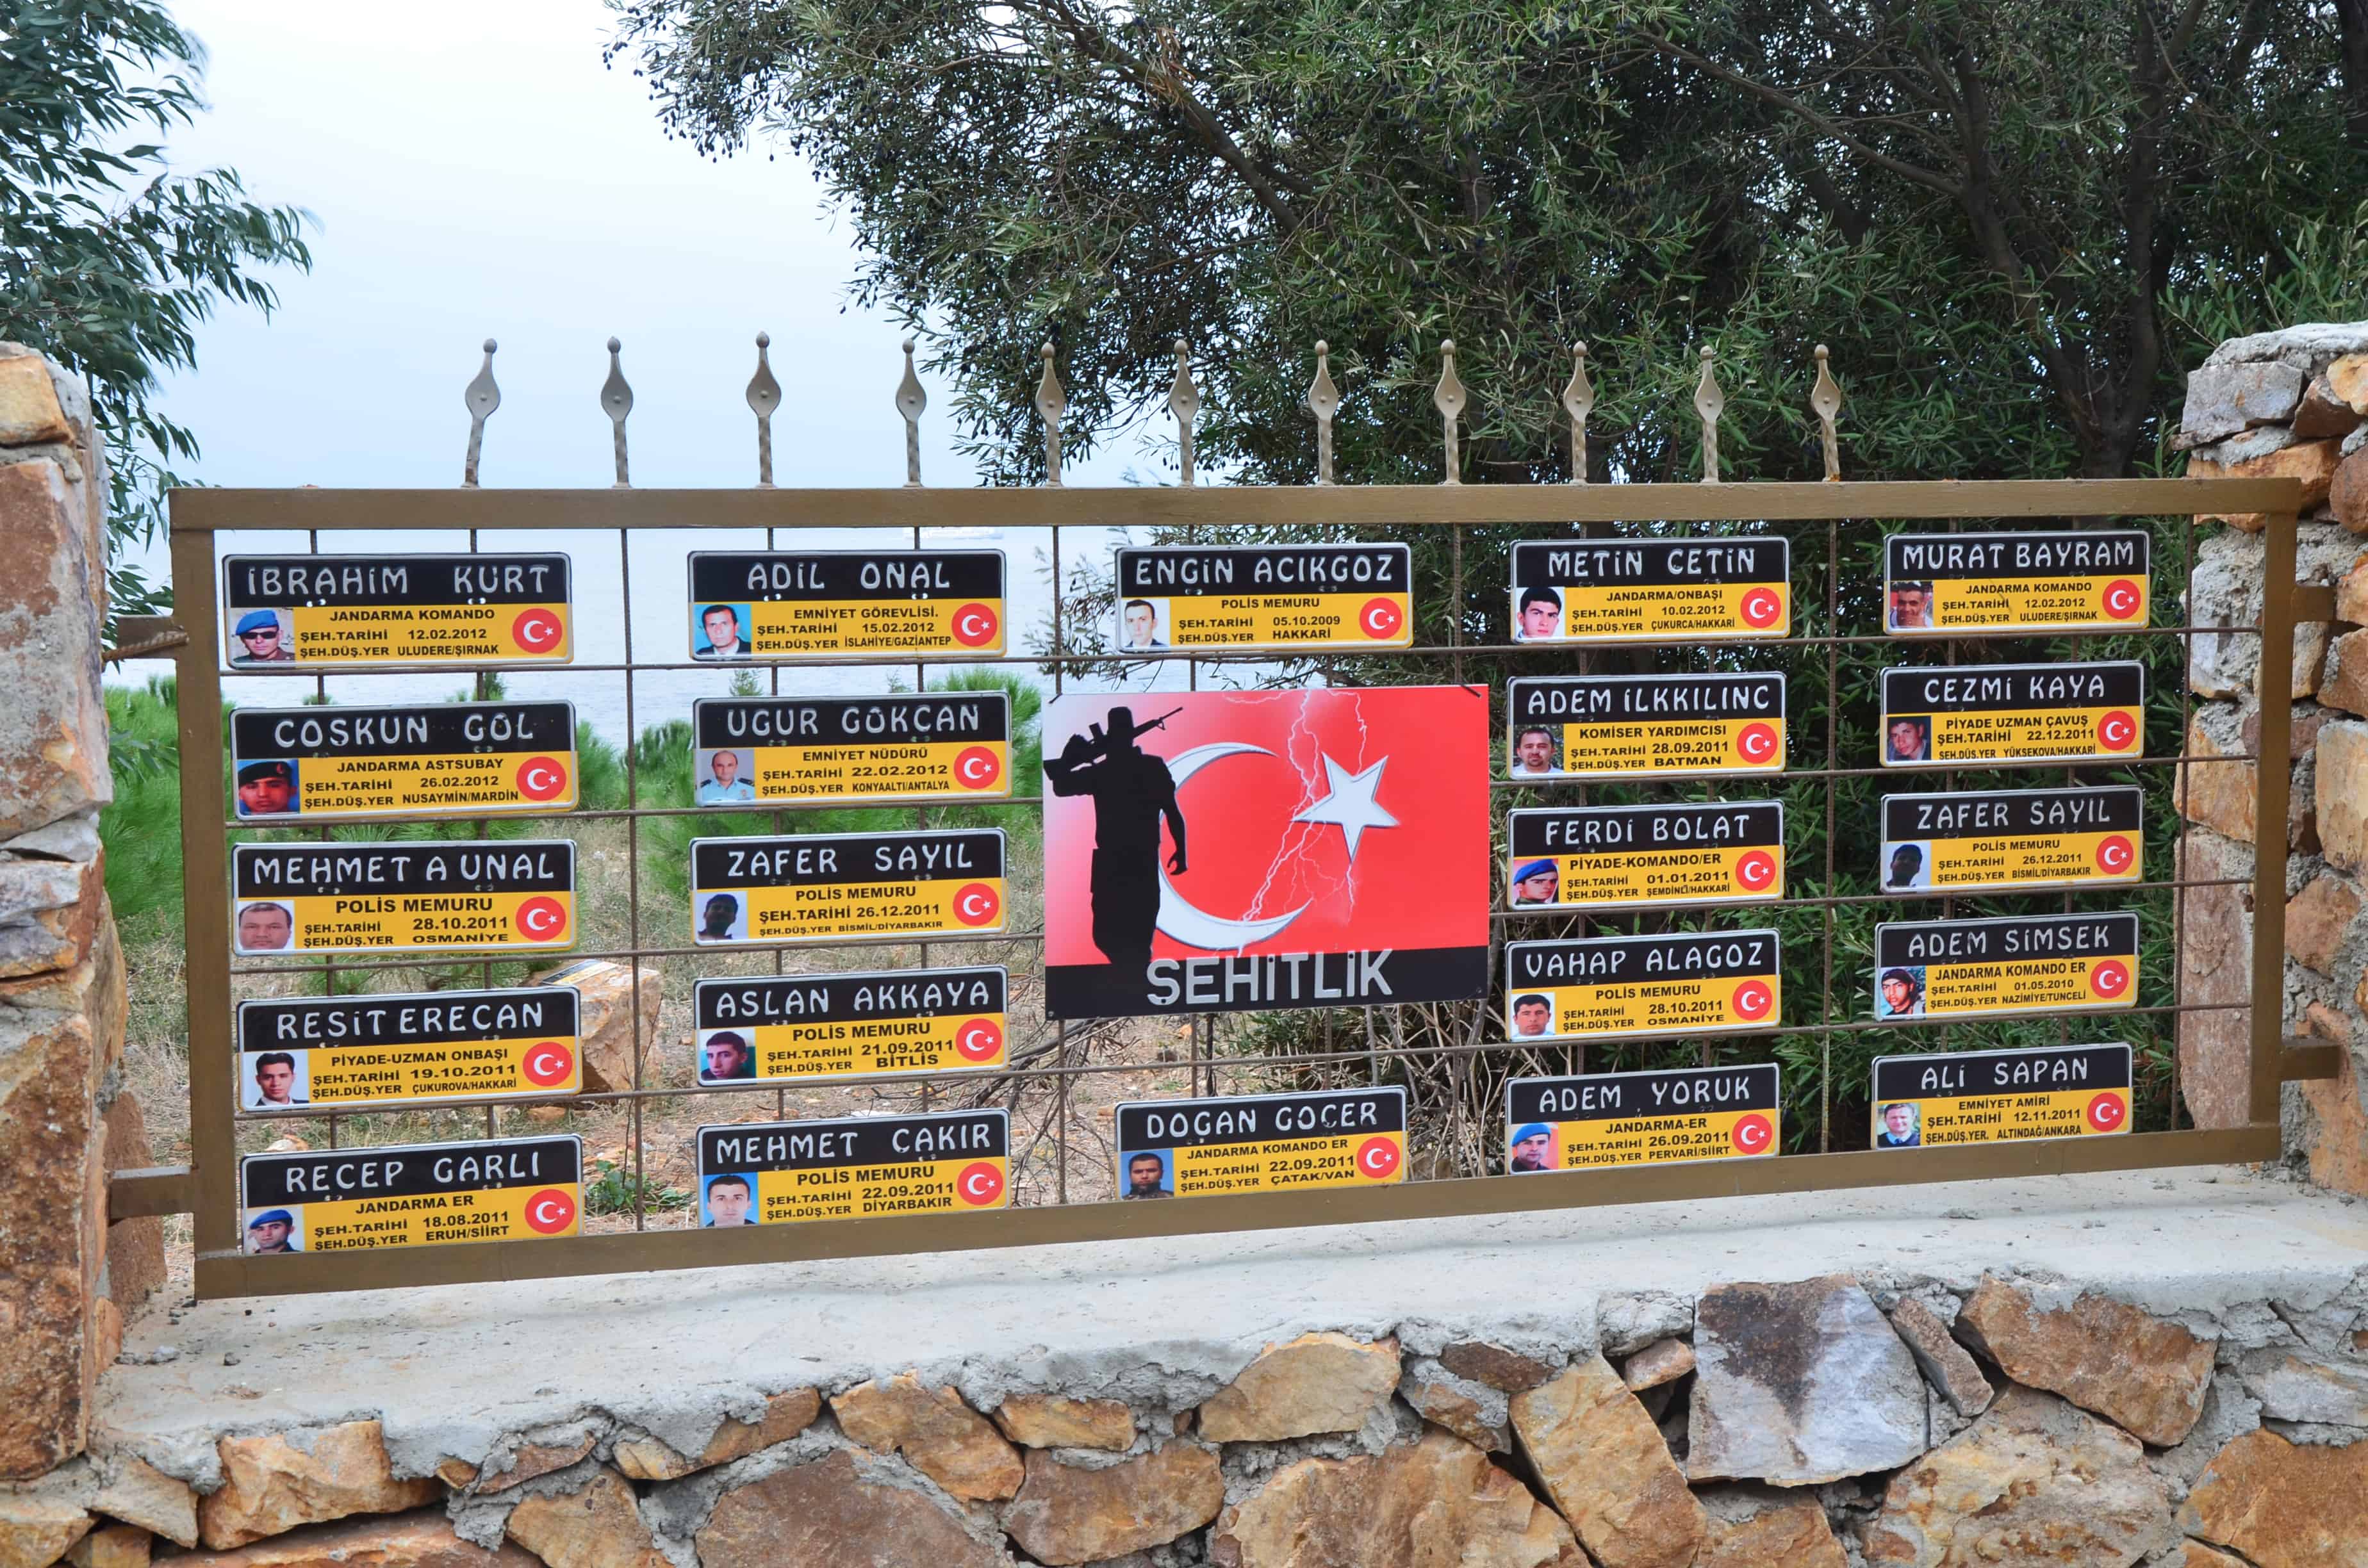 Terrorism victims memorial on Büyükada, Istanbul, Turkey